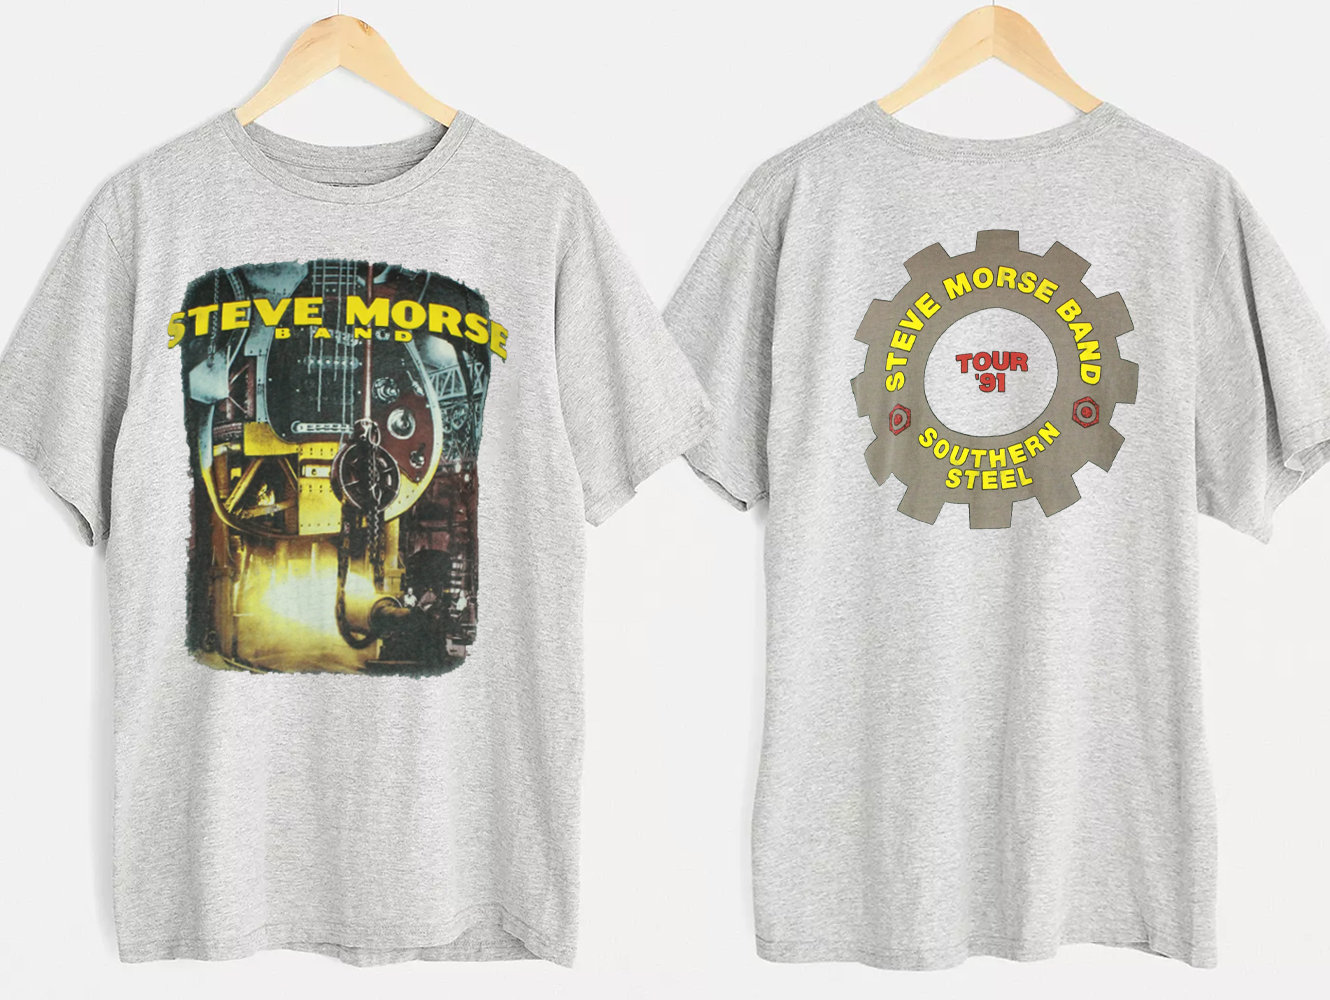 Discover Vintage Steve Morse Band Tour '91 Southern Steel T-Shirt